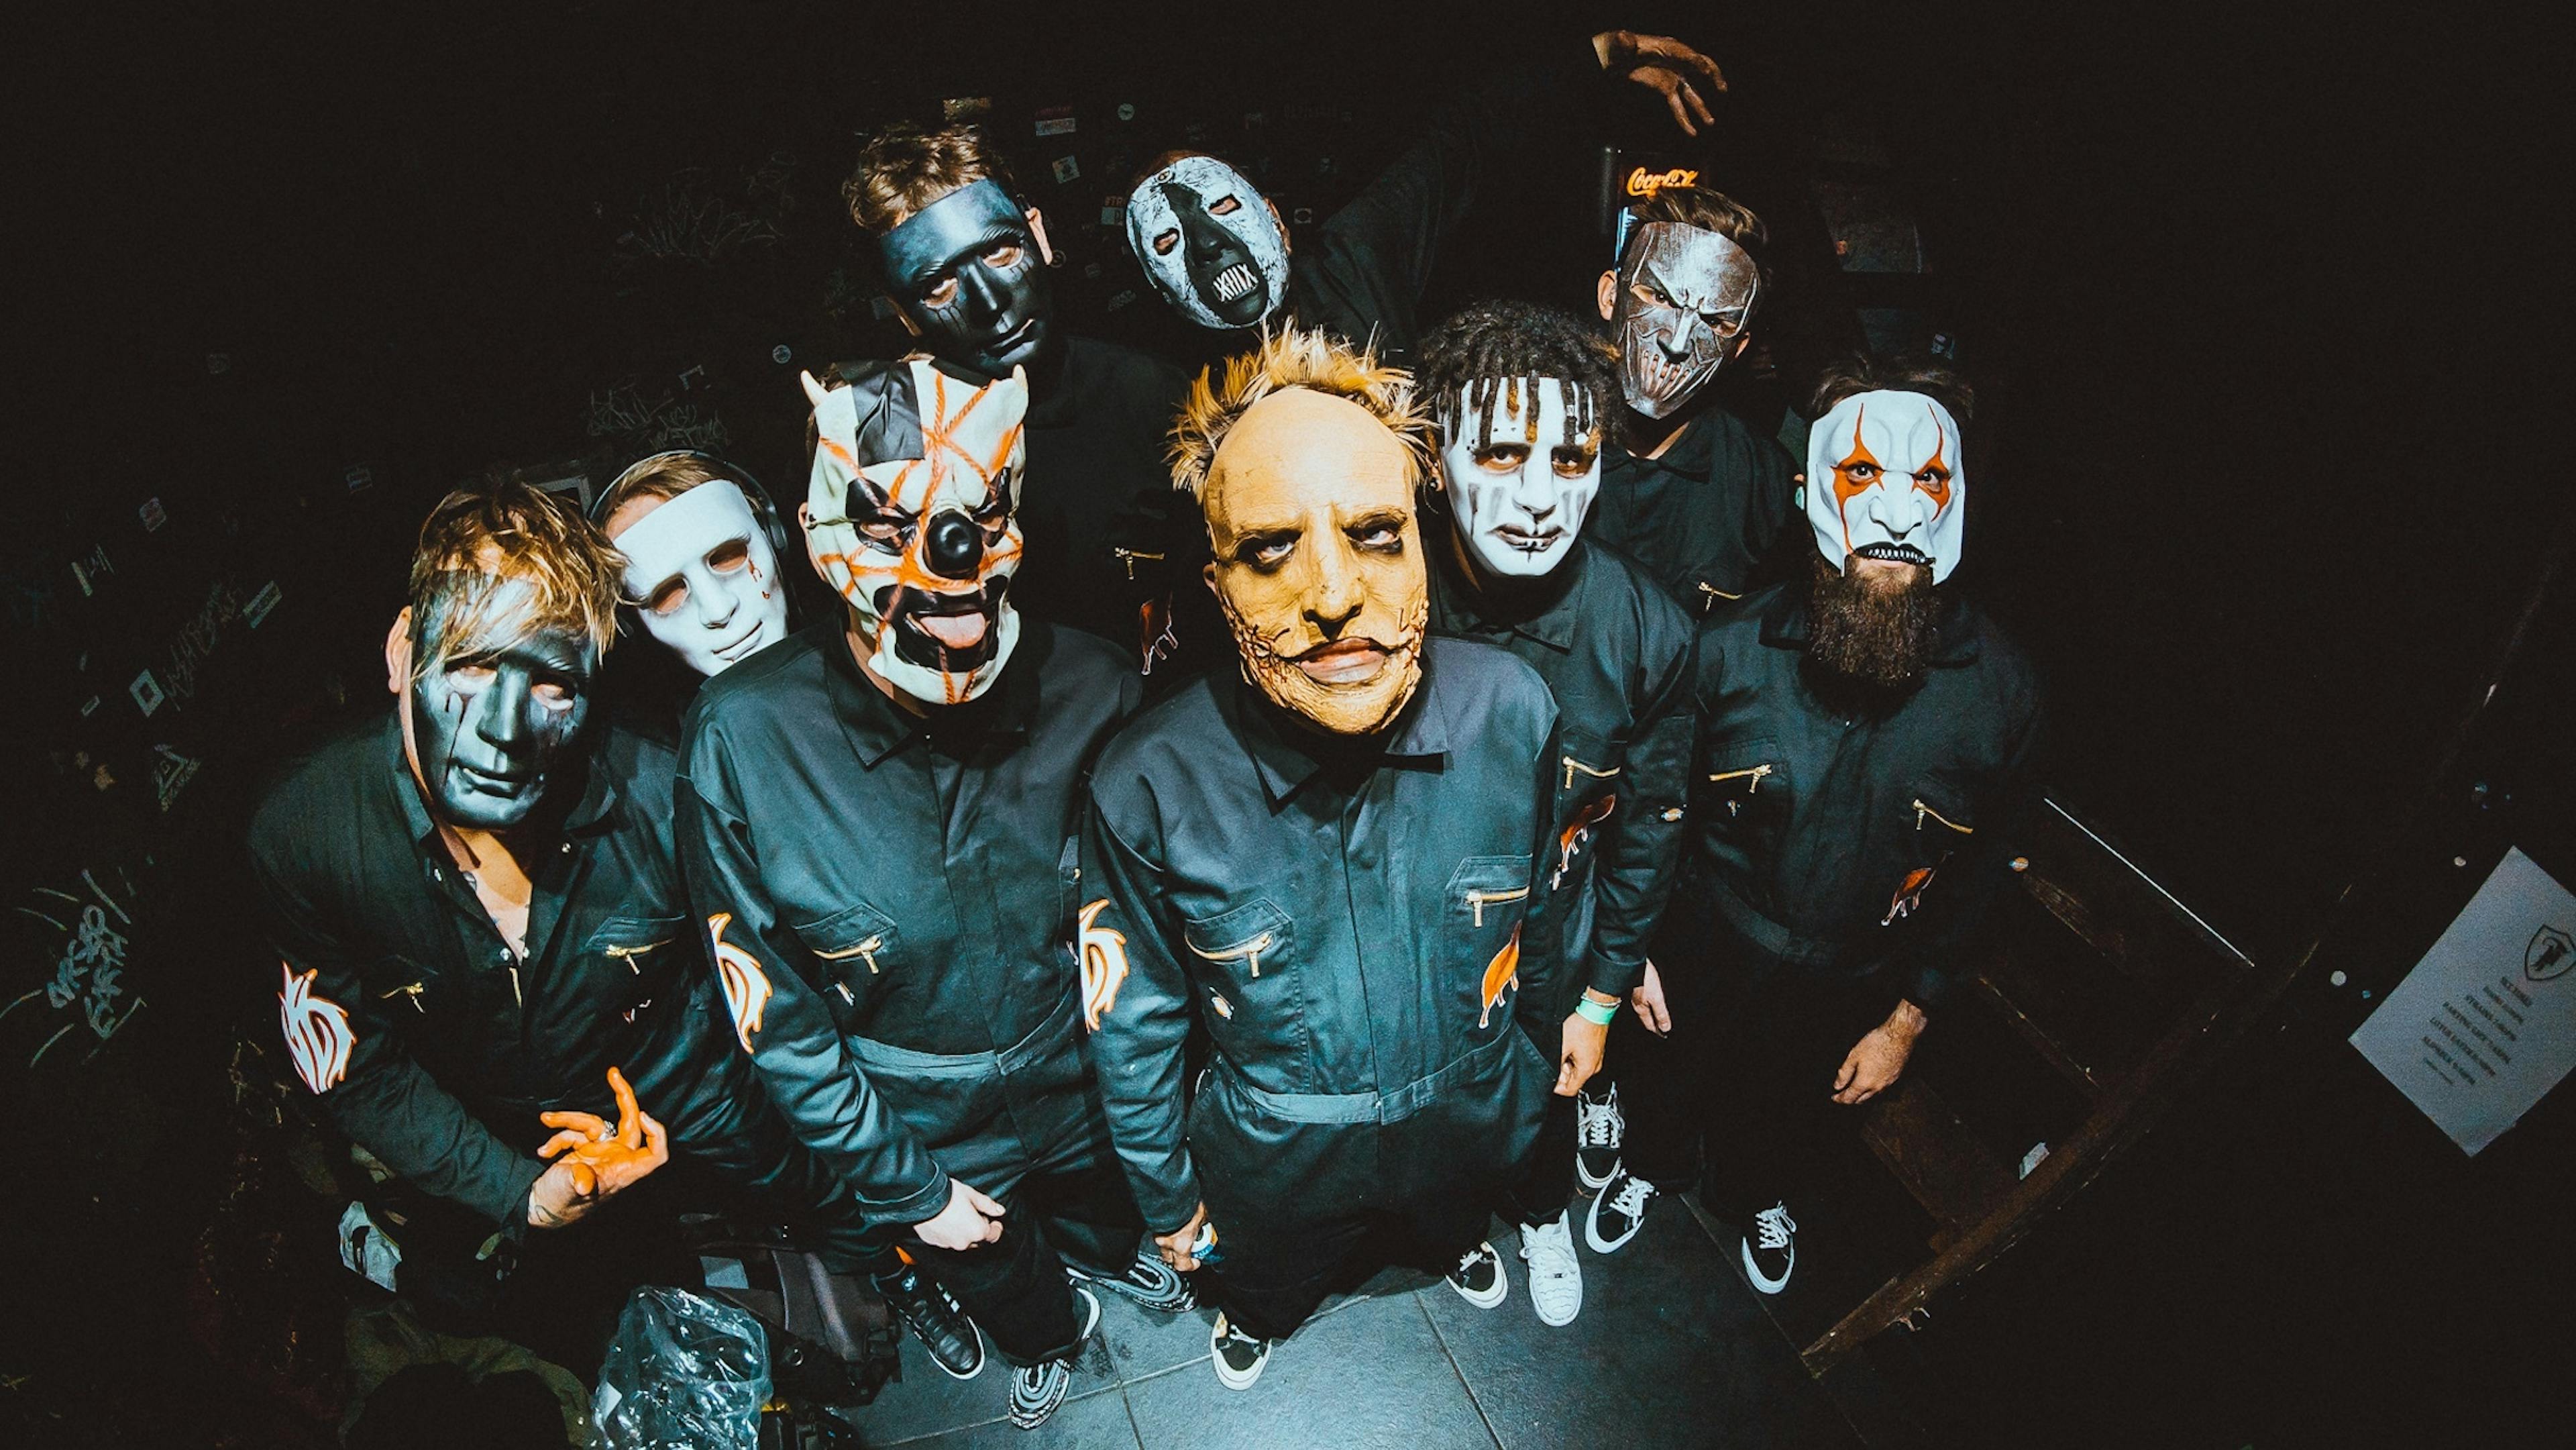 Gallery: Neck Deep Play Halloween Show Dressed As Slipknot